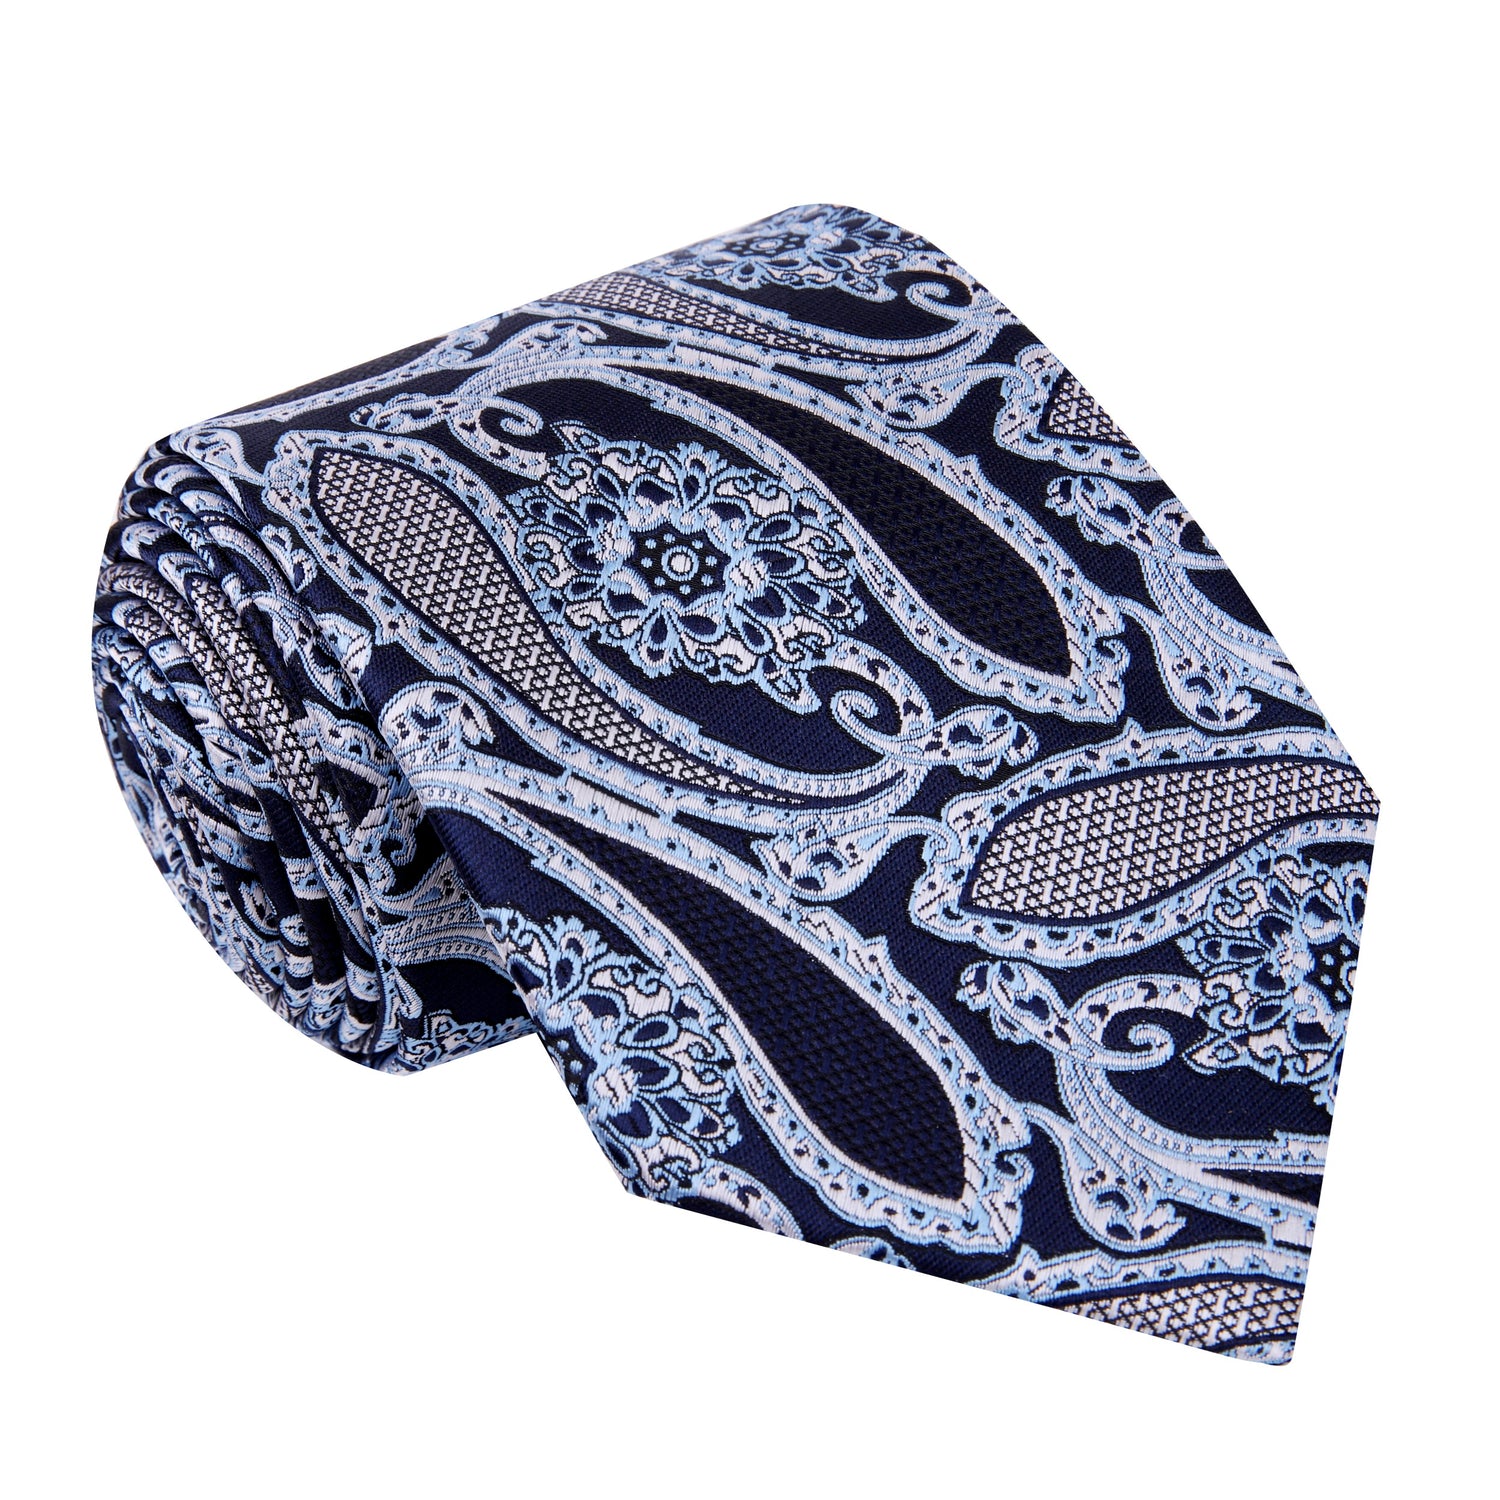 A Black, Ice Blue, White Paisley Pattern Silk Necktie, 